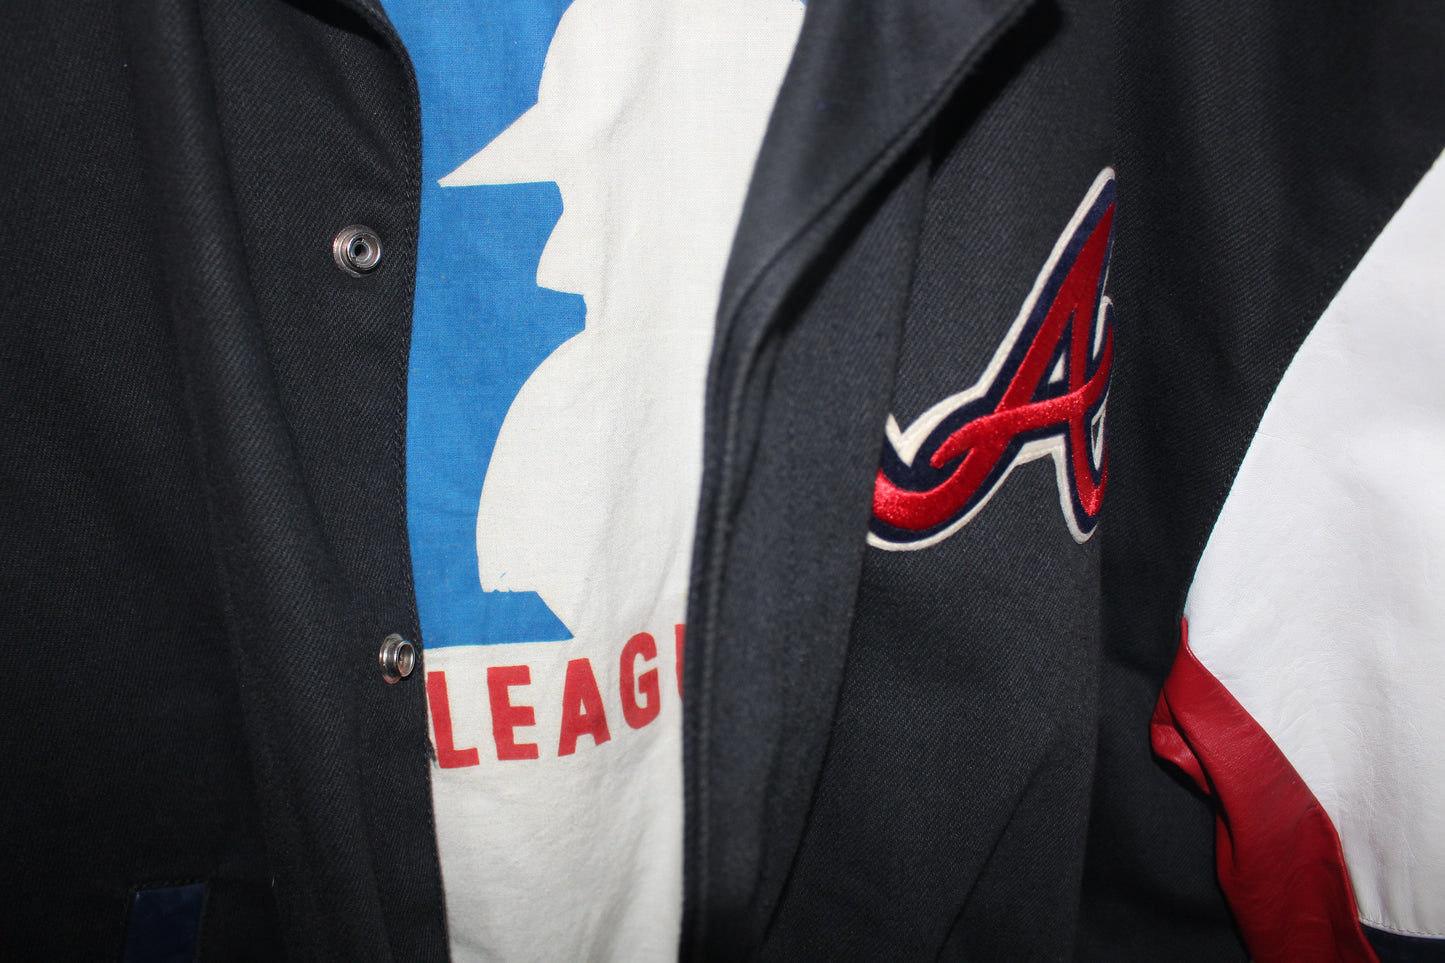 Rare Atlanta Braves Jeff Hamilton Leather Jacket (L)